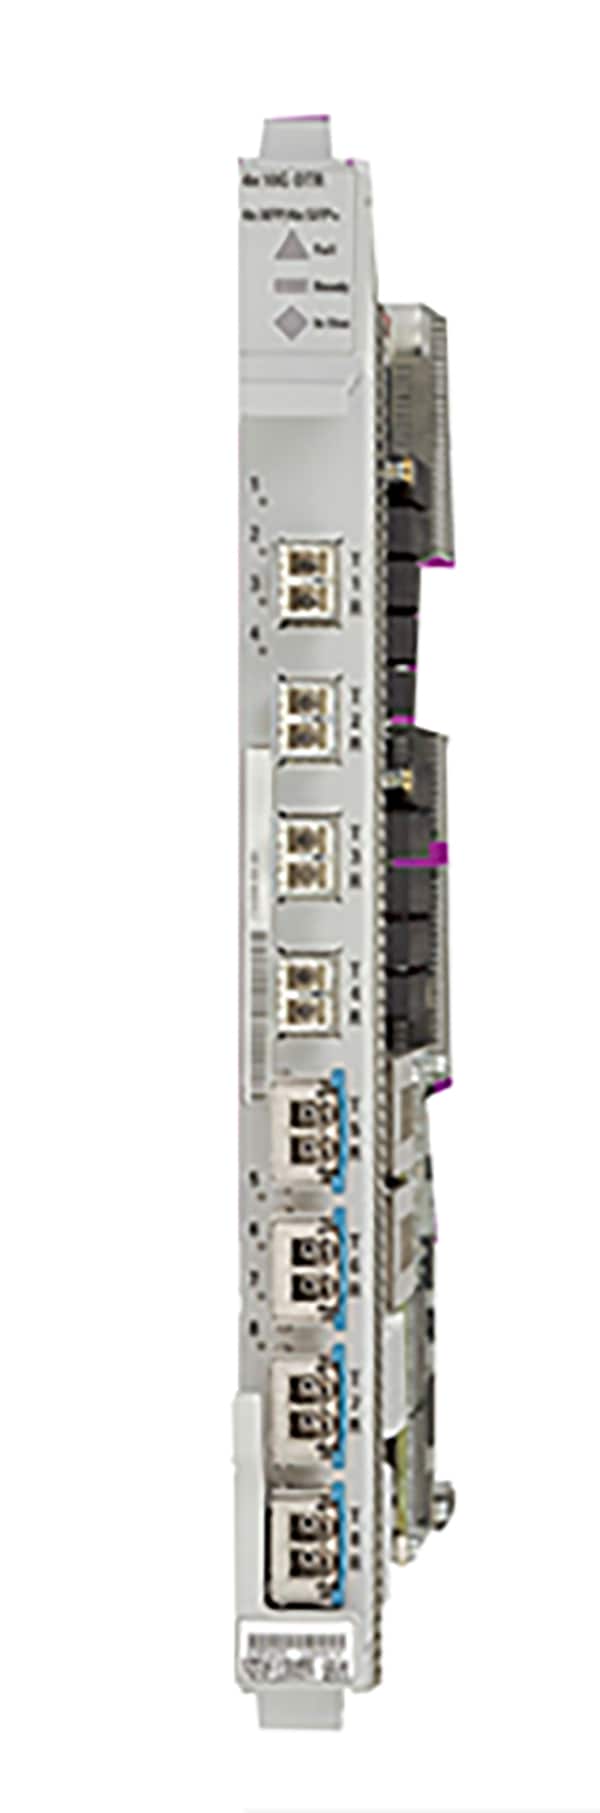 Ciena 4x10G Optical Transponder with 4x XFP/4x SFP+ Encryption for 6500 Packet-Optical Platform